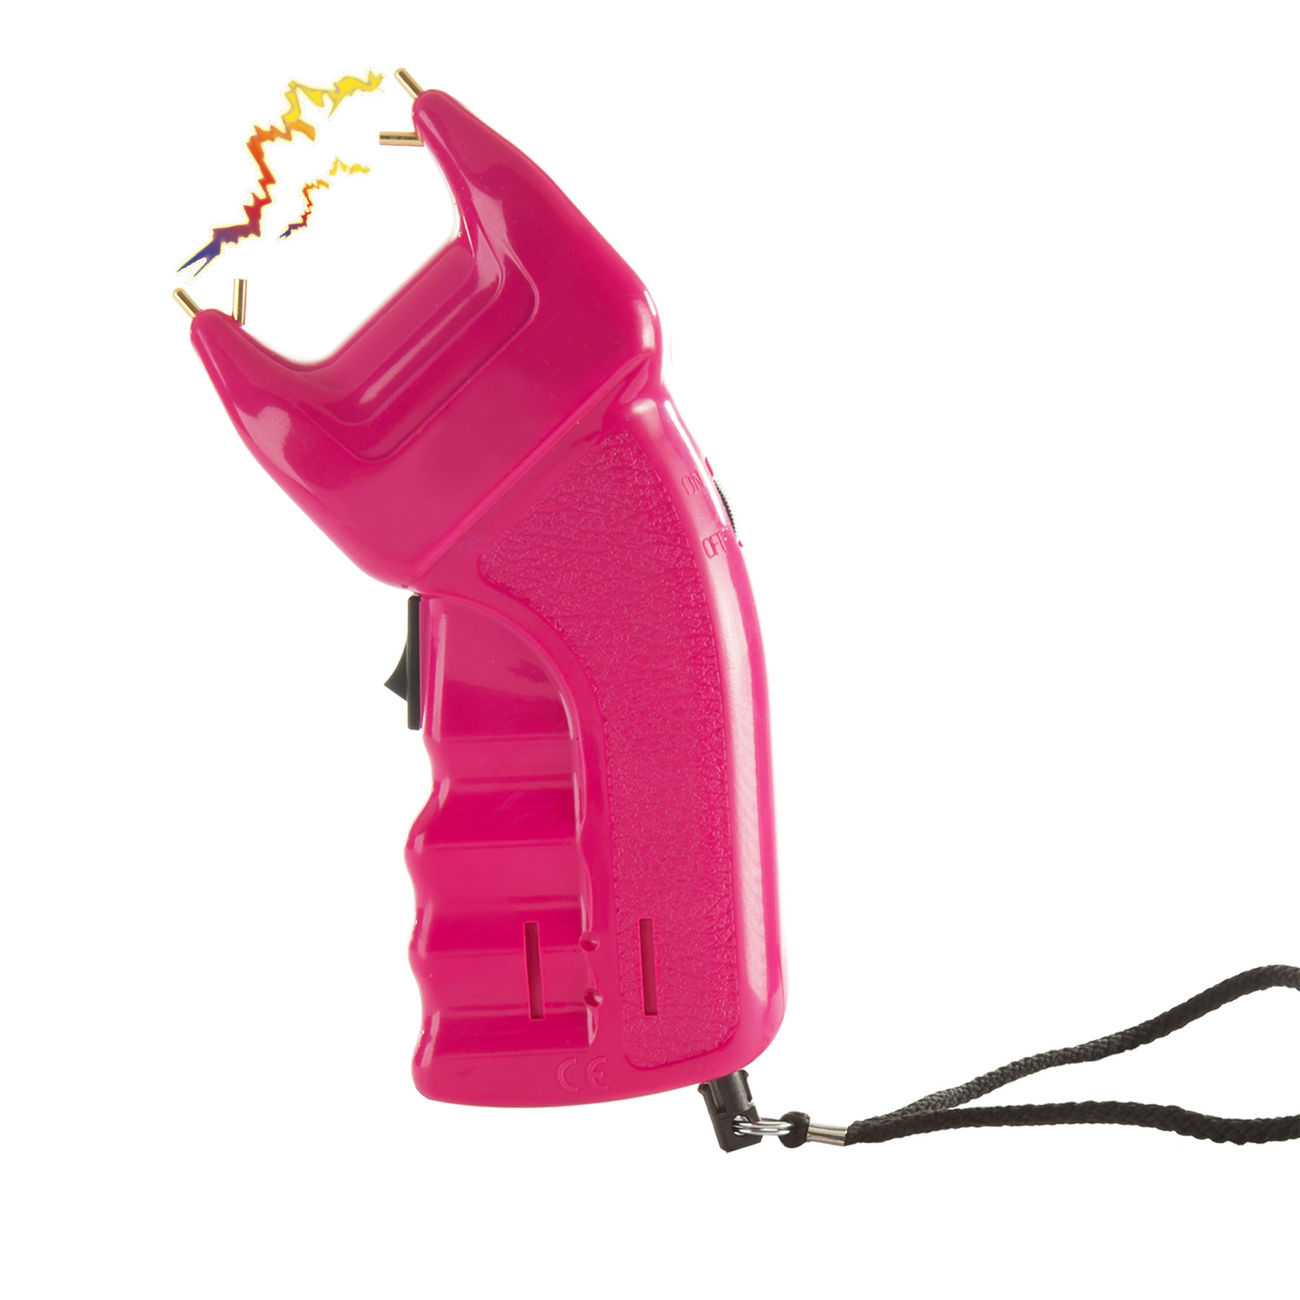 ESP Elektroschocker Lady Power PTB 200.000 Volt pink kaufen